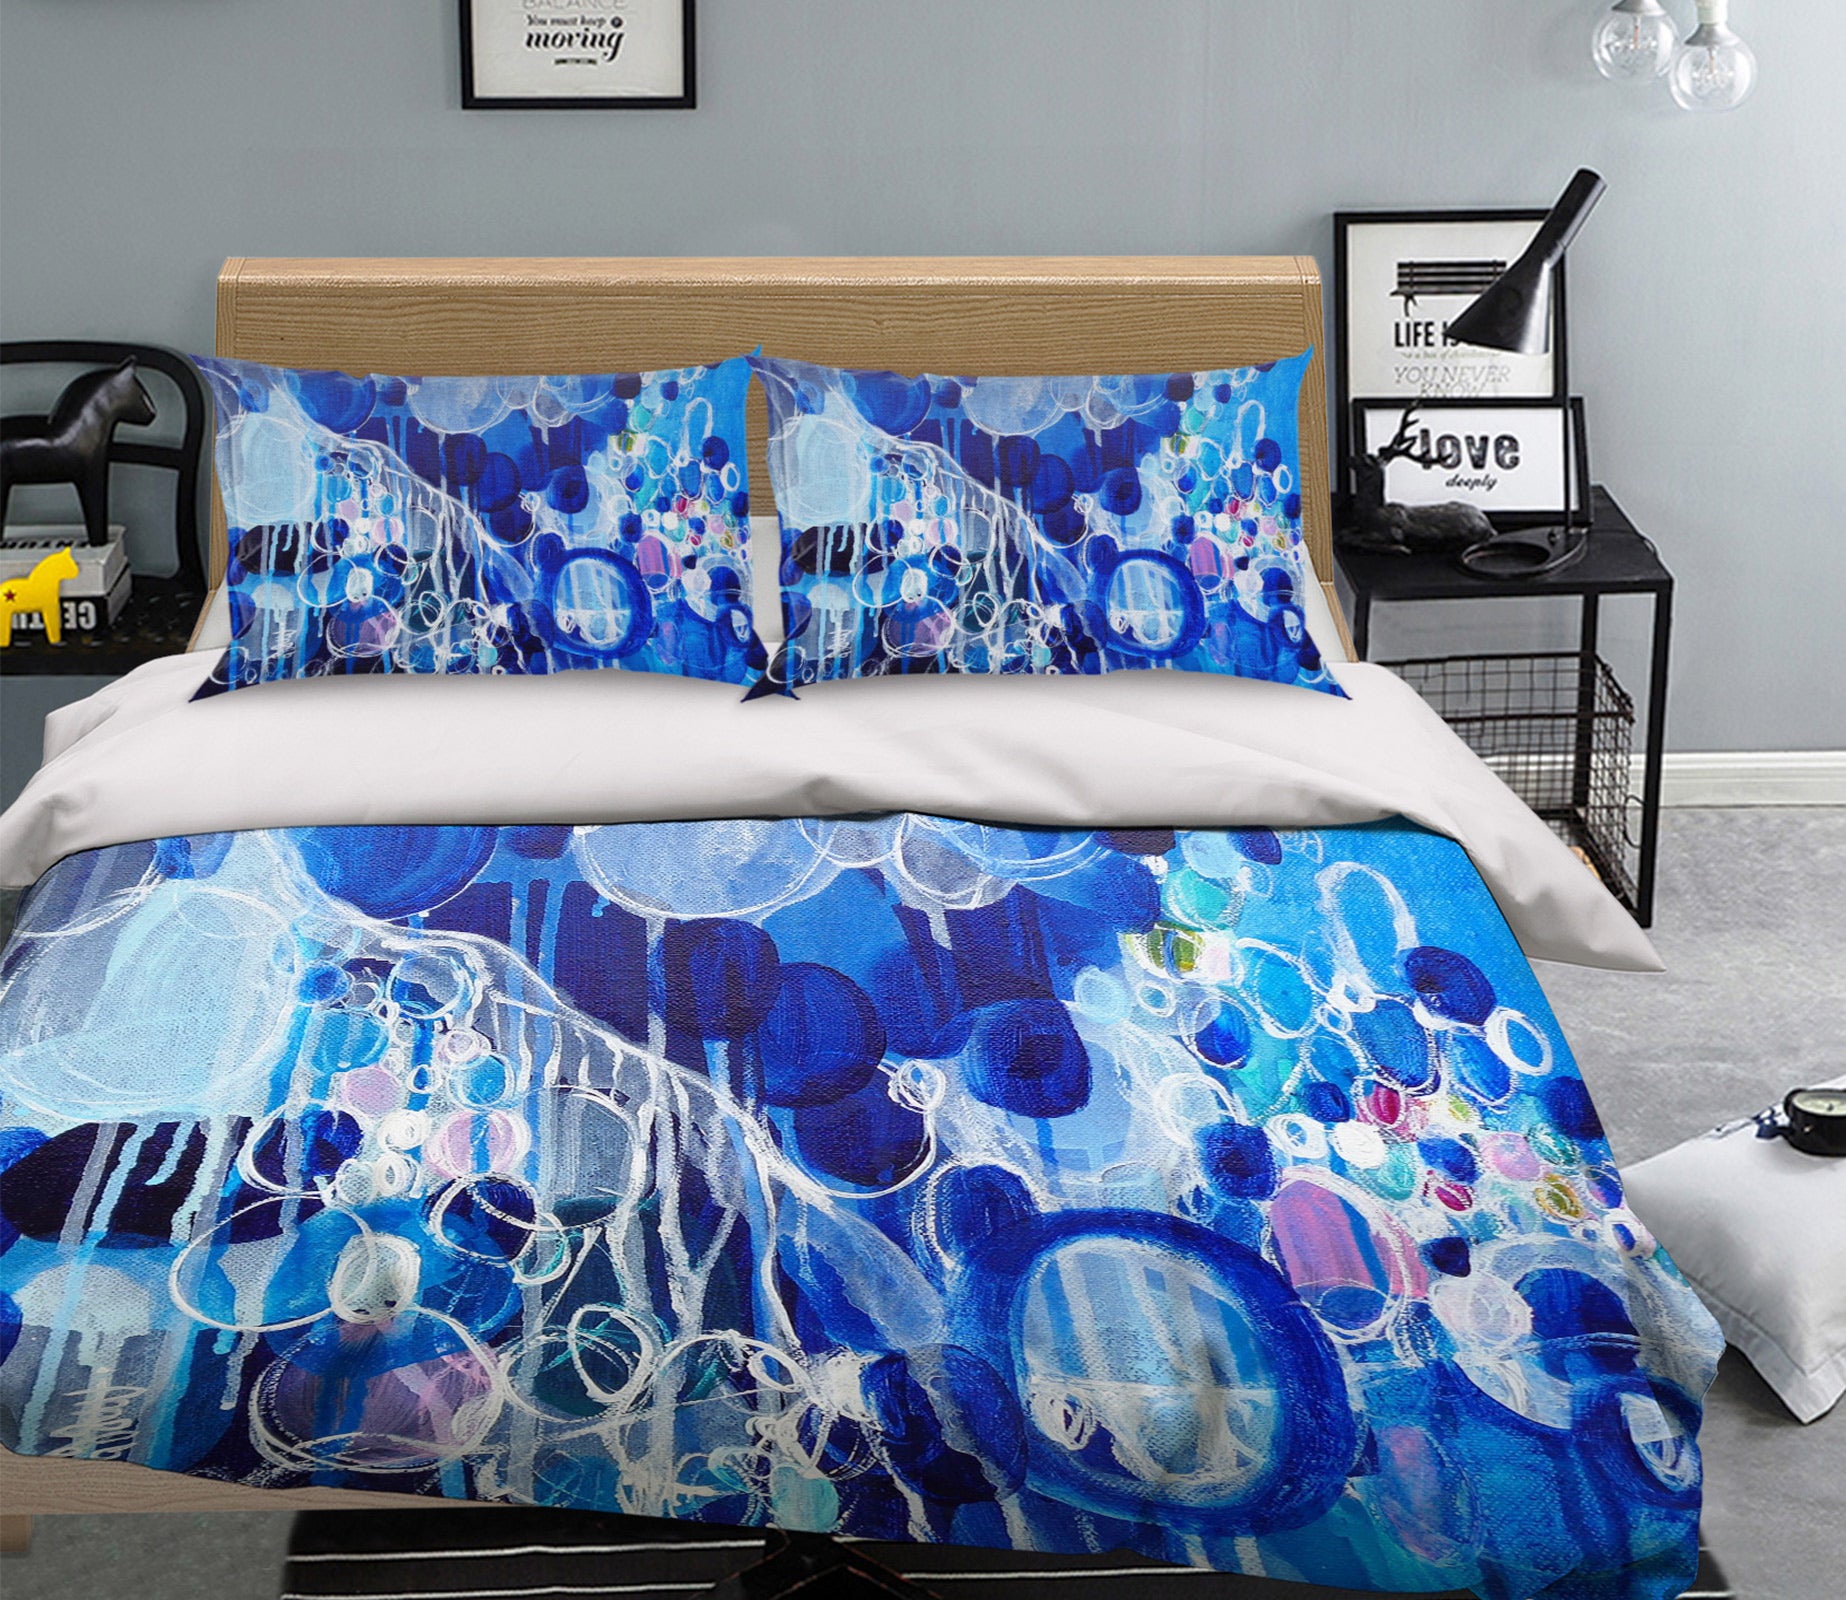 3D Blue Circle Bubble 1122 Misako Chida Bedding Bed Pillowcases Quilt